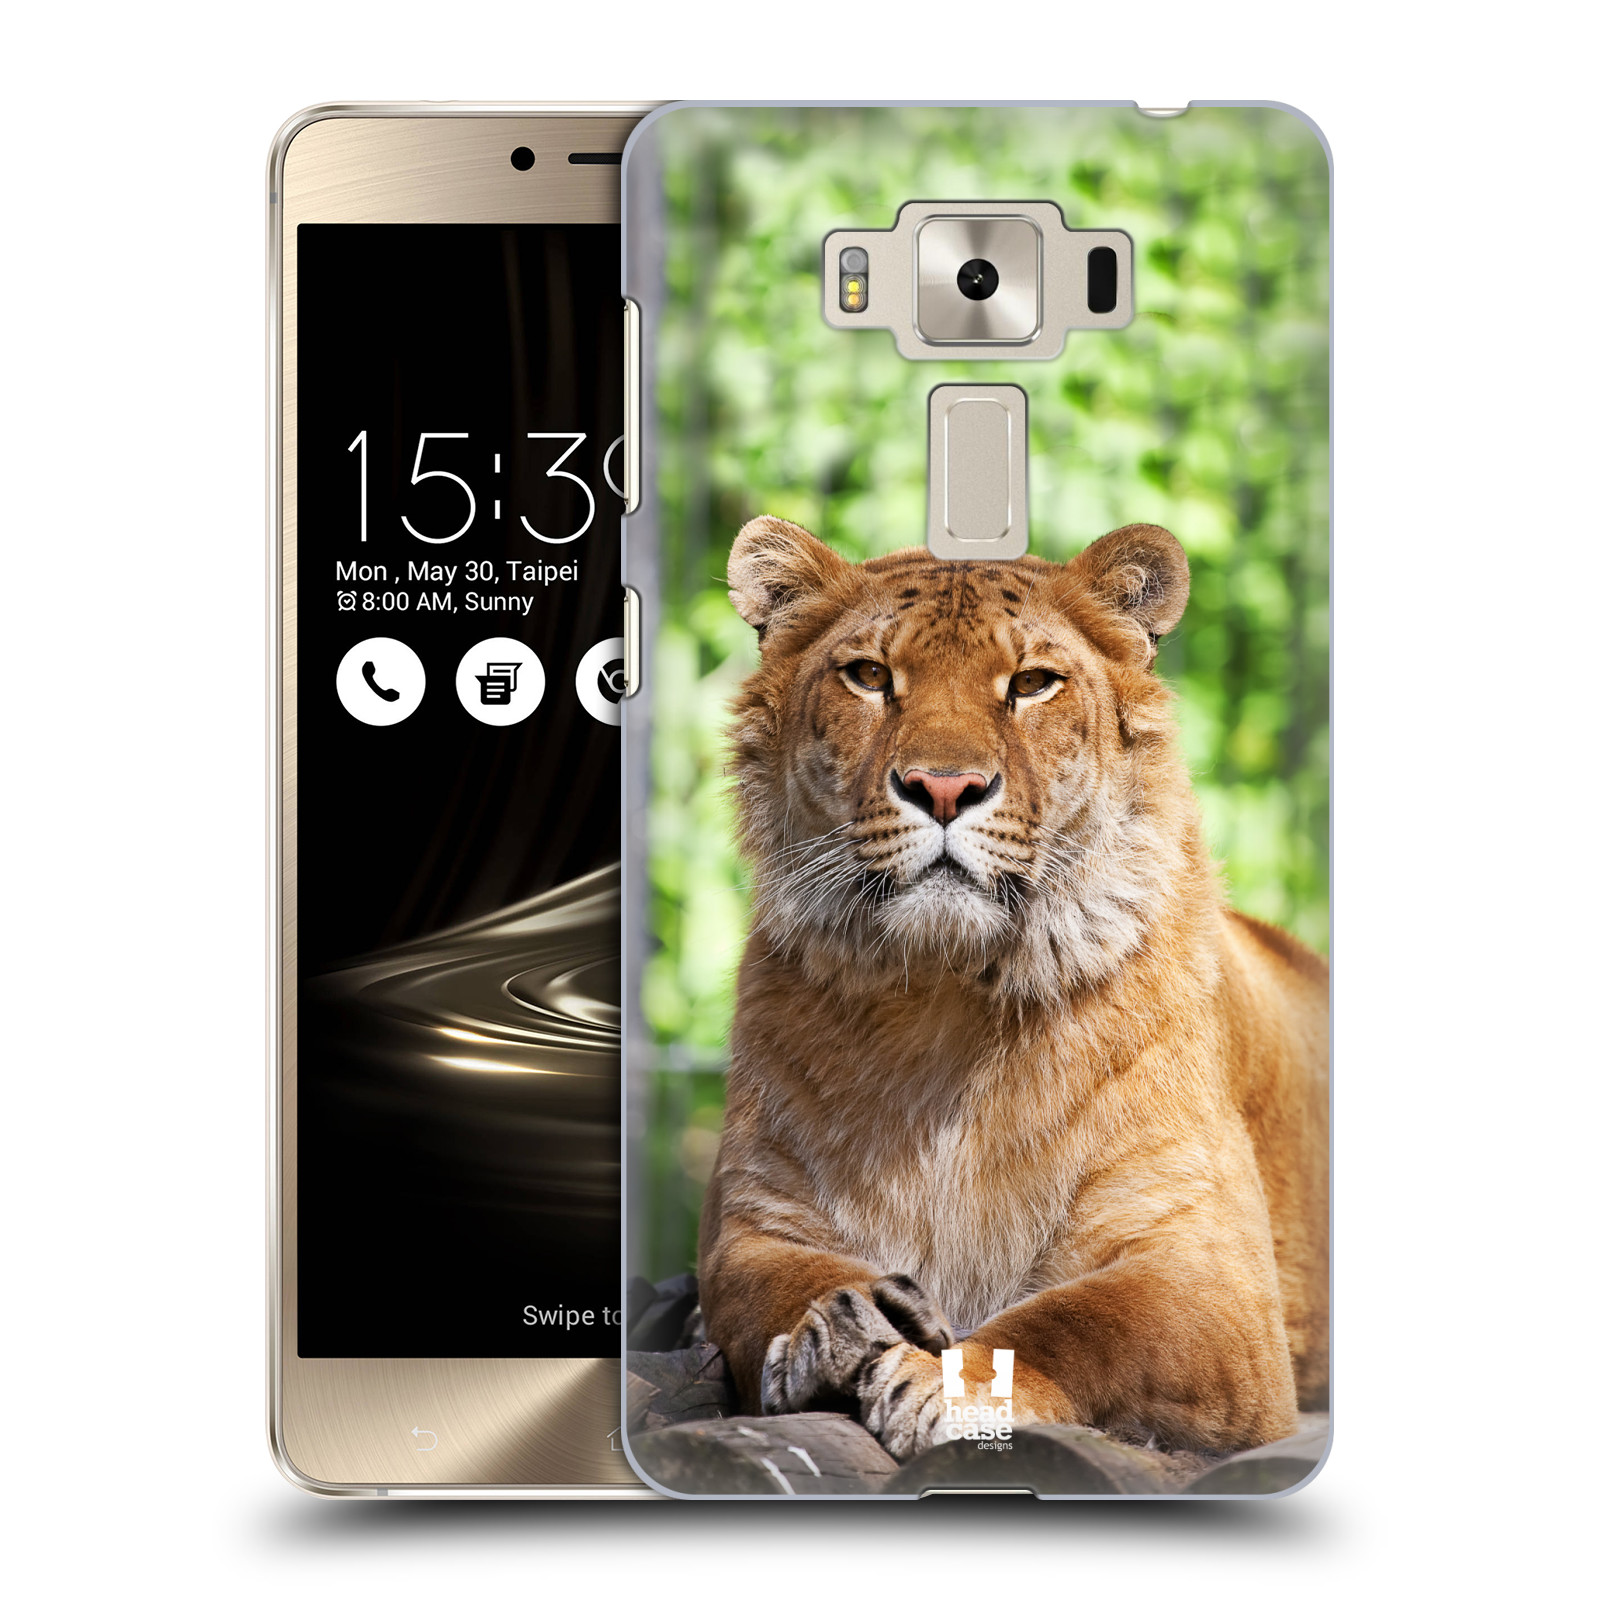 HEAD CASE plastový obal na mobil Asus Zenfone 3 DELUXE ZS550KL vzor slavná zvířata foto tygr